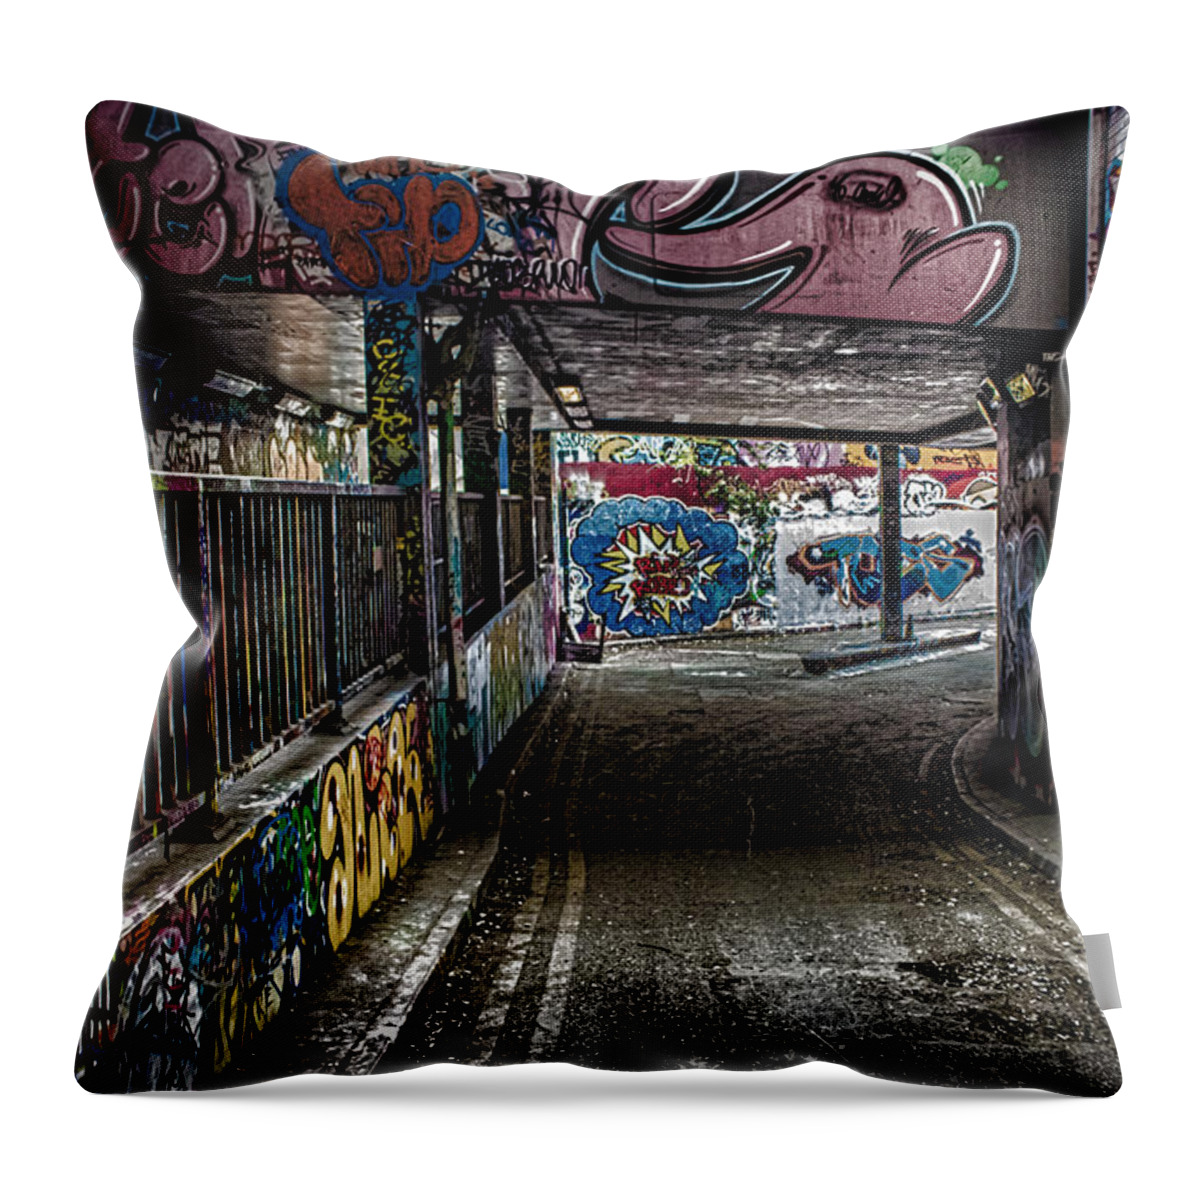 Graffiti Throw Pillow featuring the photograph London Graffiti by Martin Newman